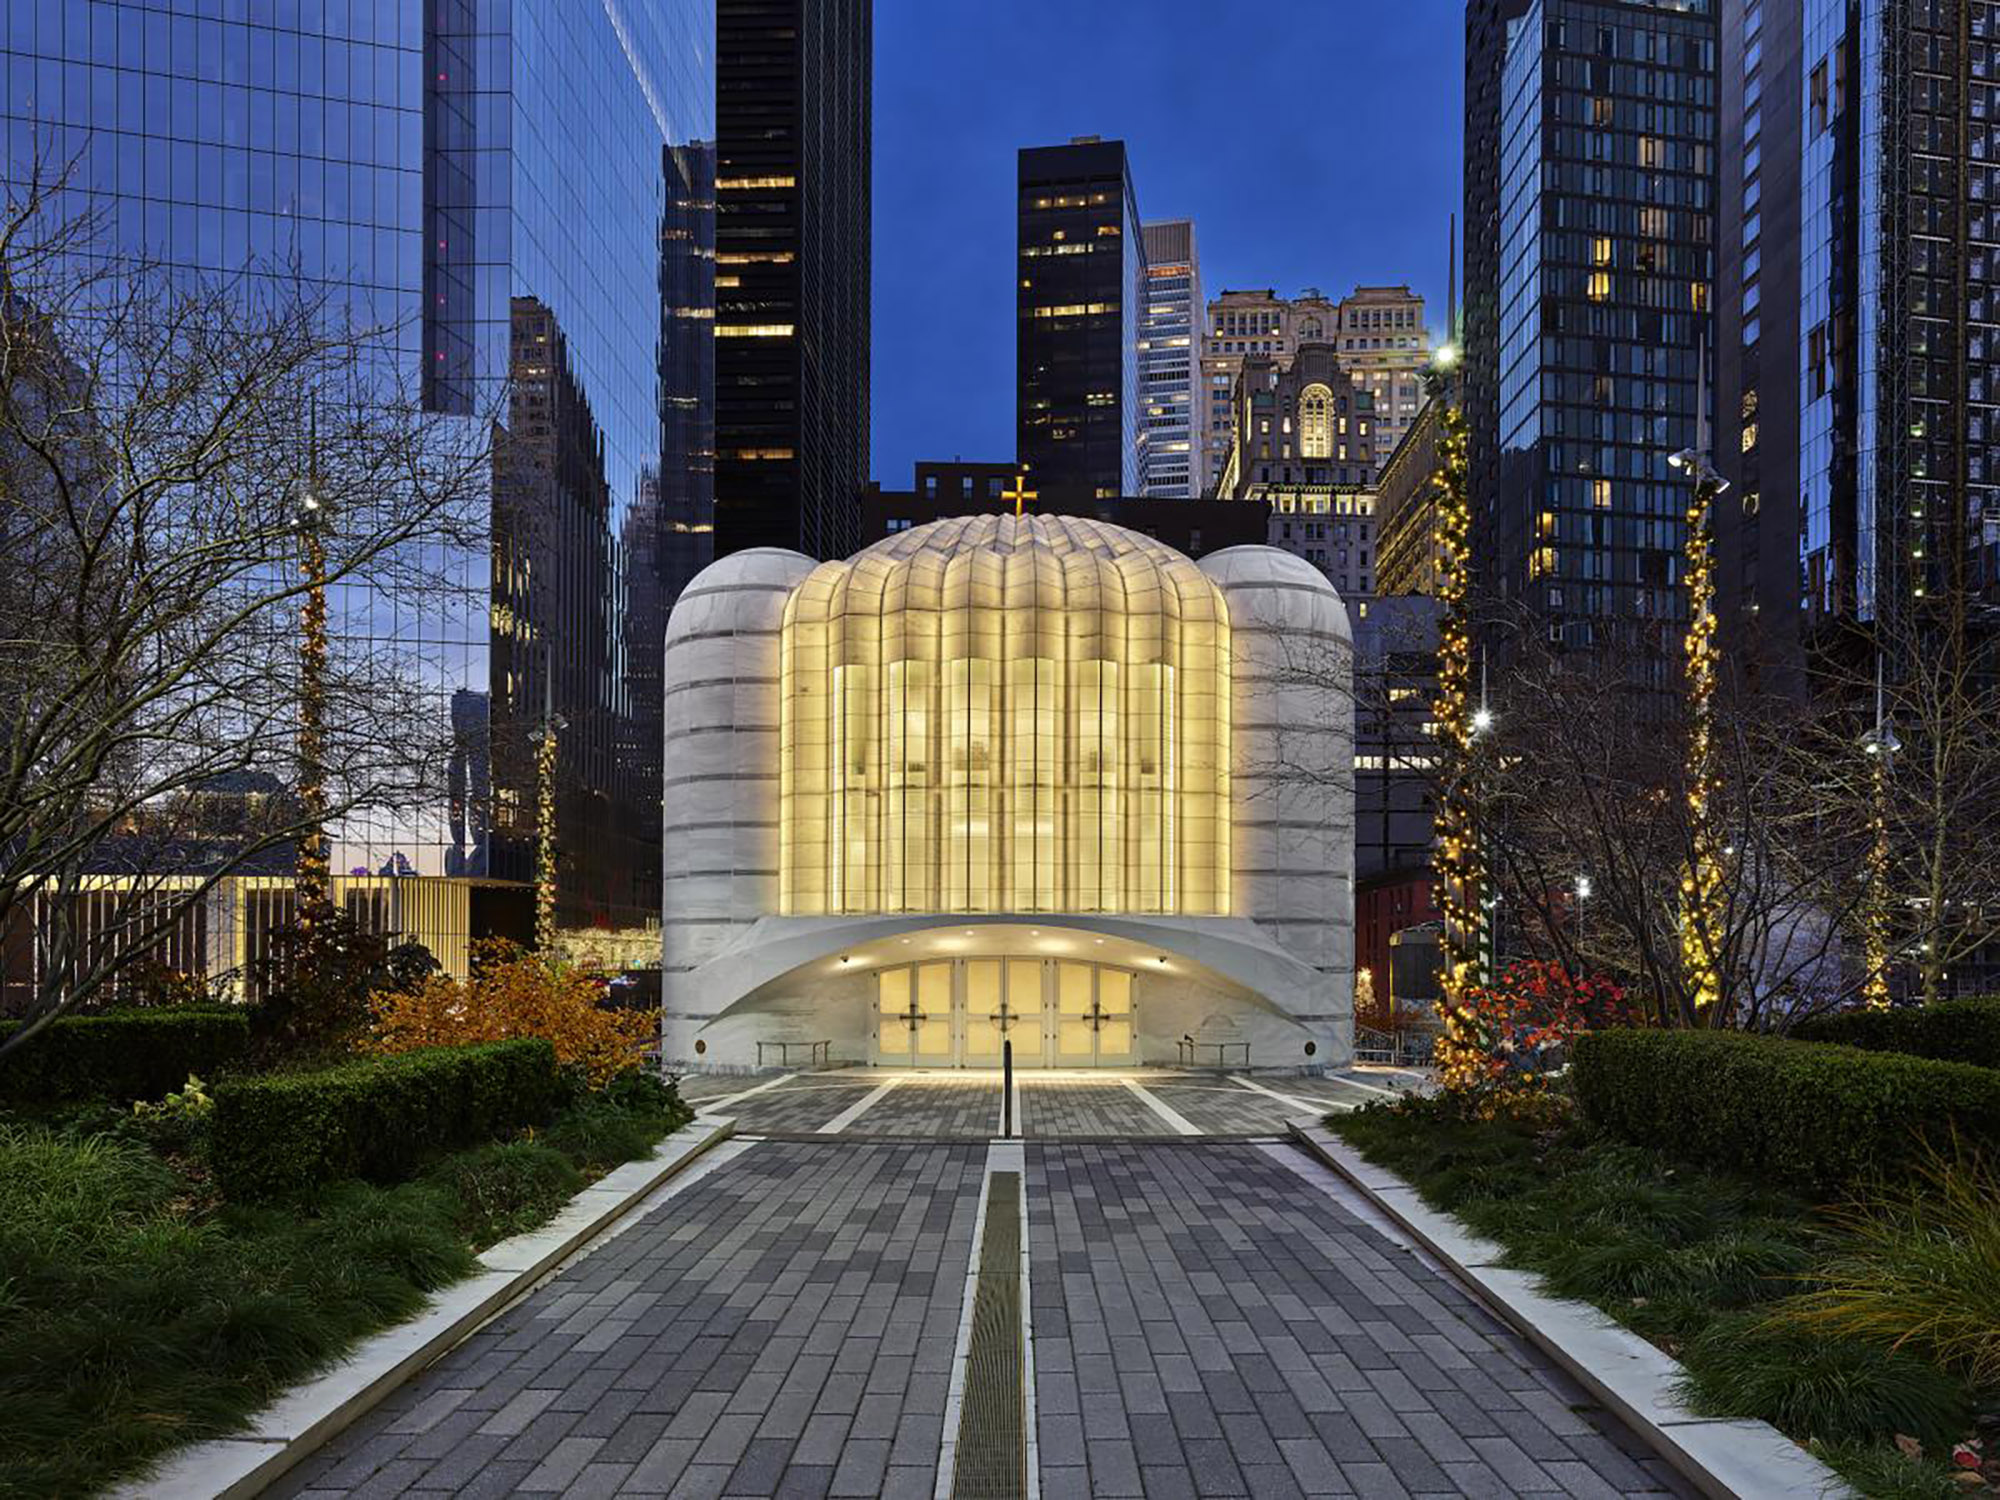 St. Nicholas Church - New York, NY design by Santiago Calatrava